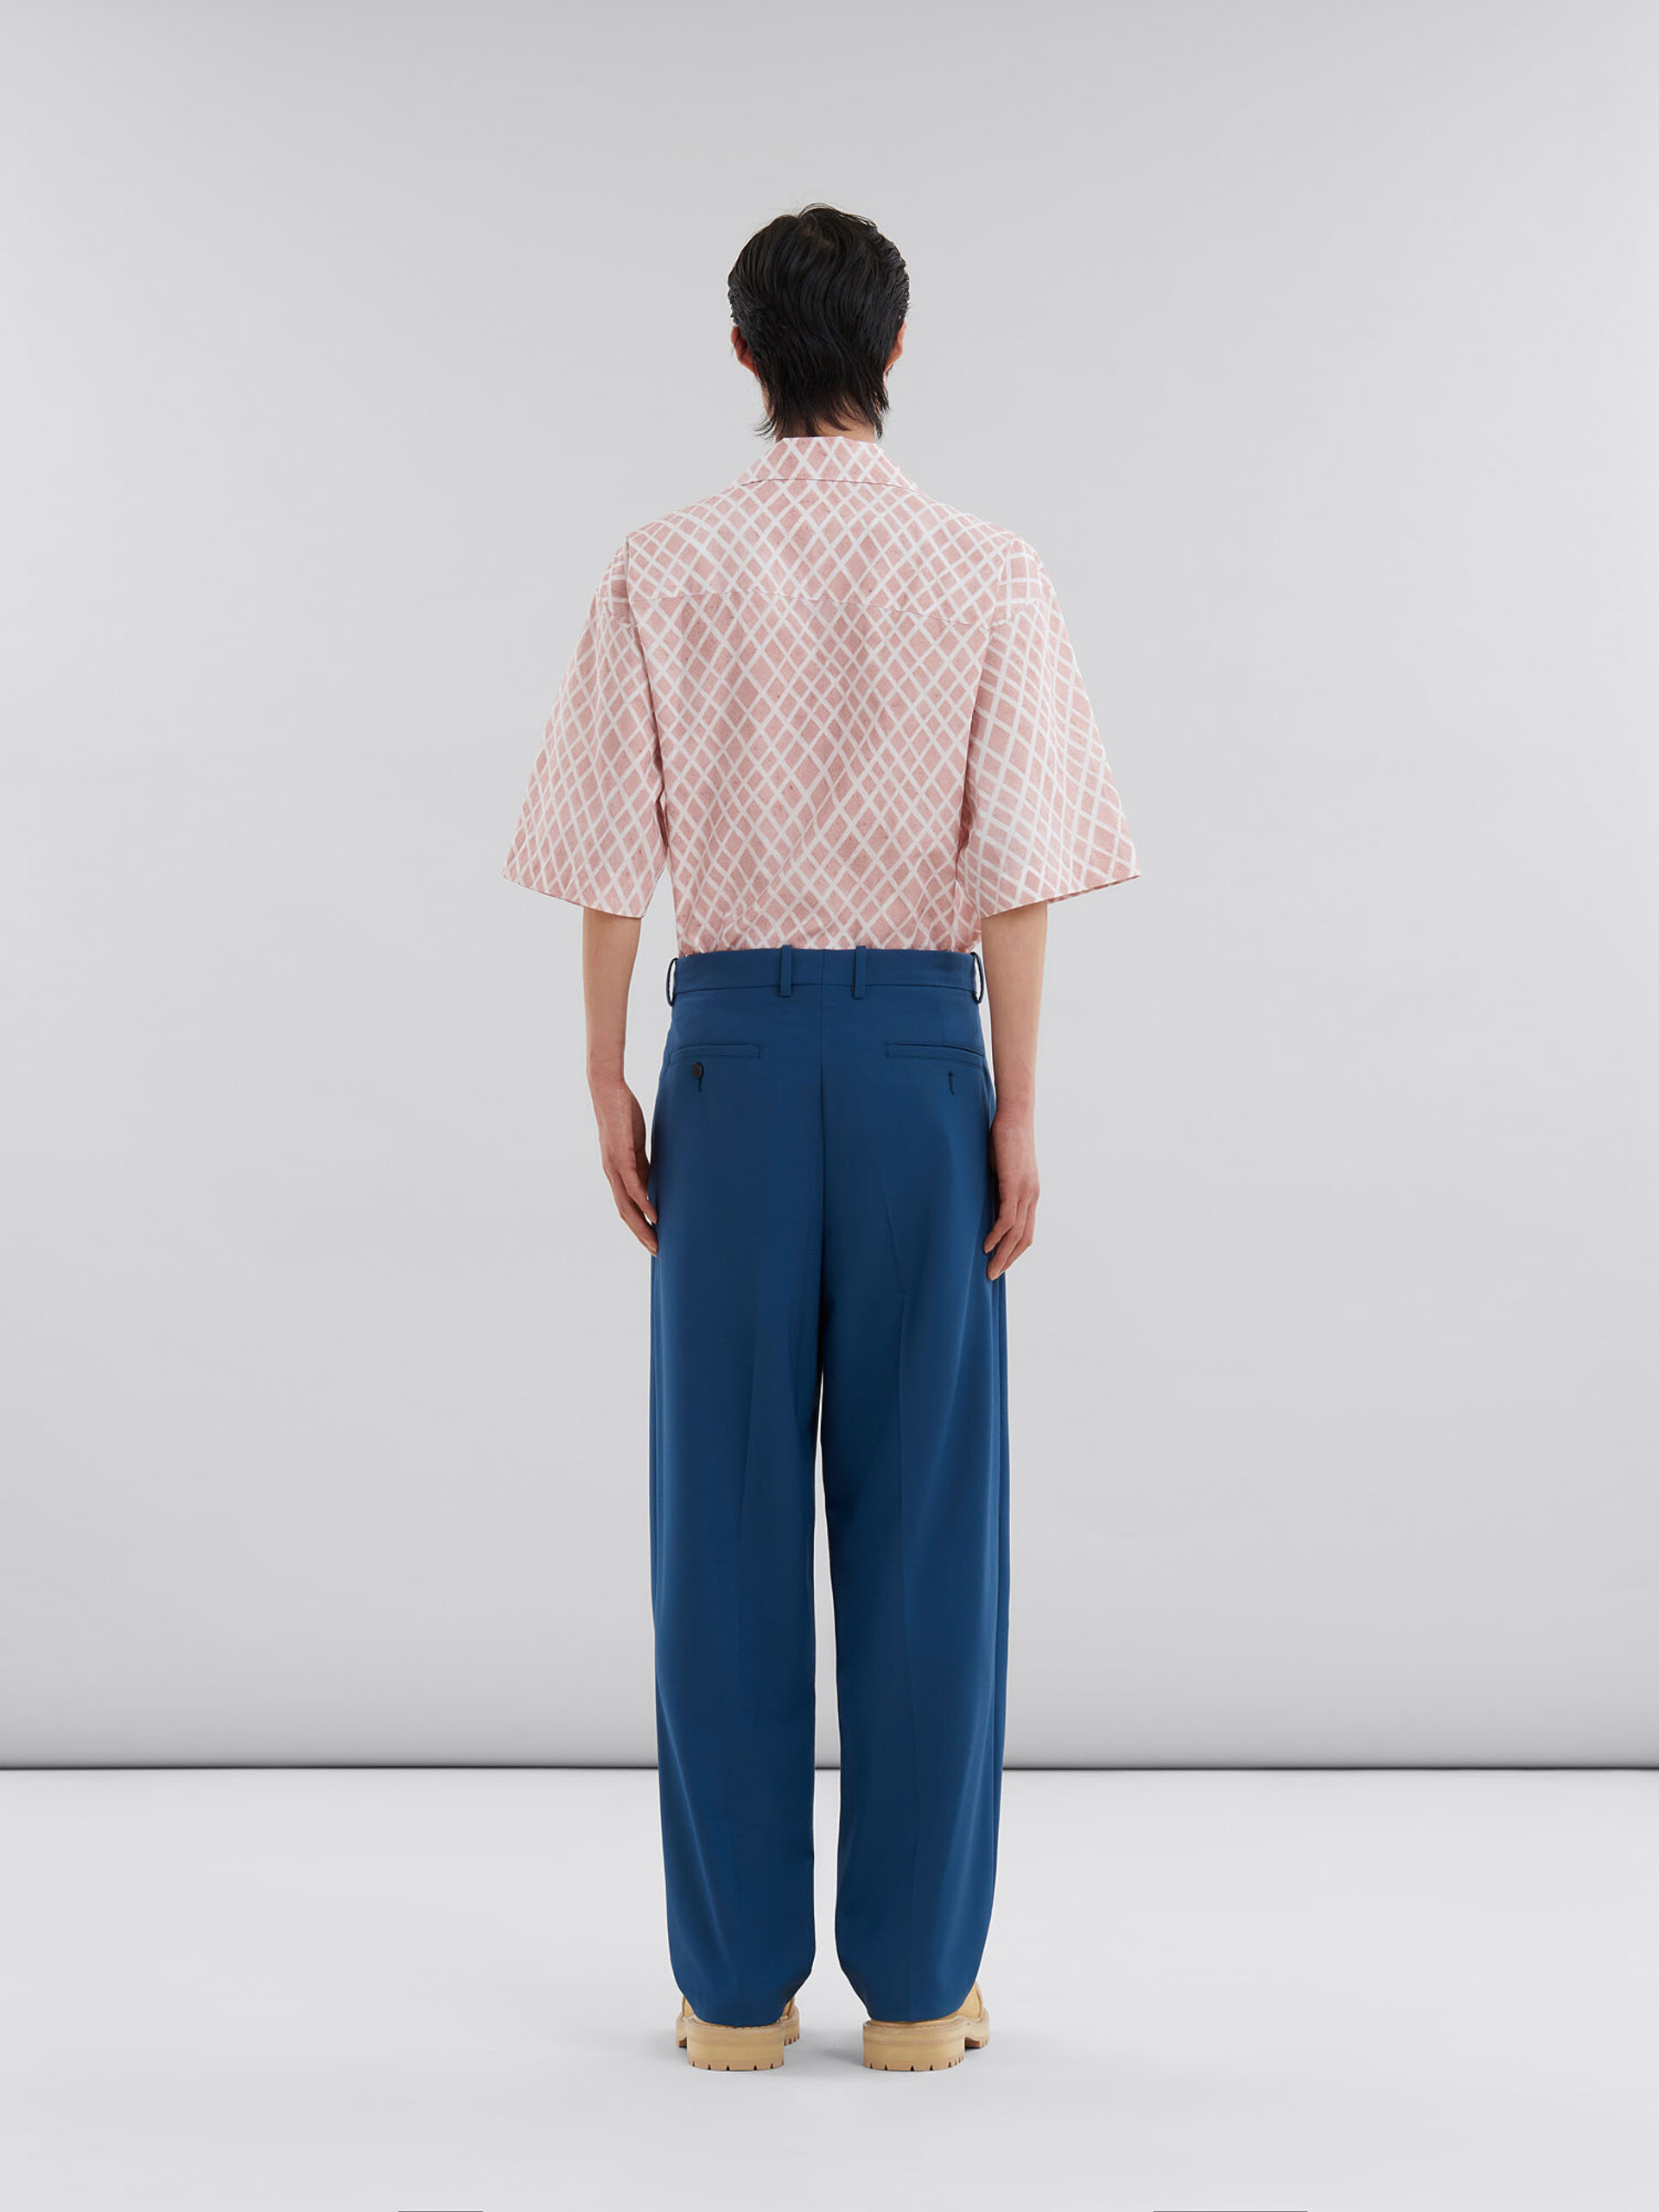 Pantaloni in lana blu con logo rammendo Marni - Pantaloni - Image 3